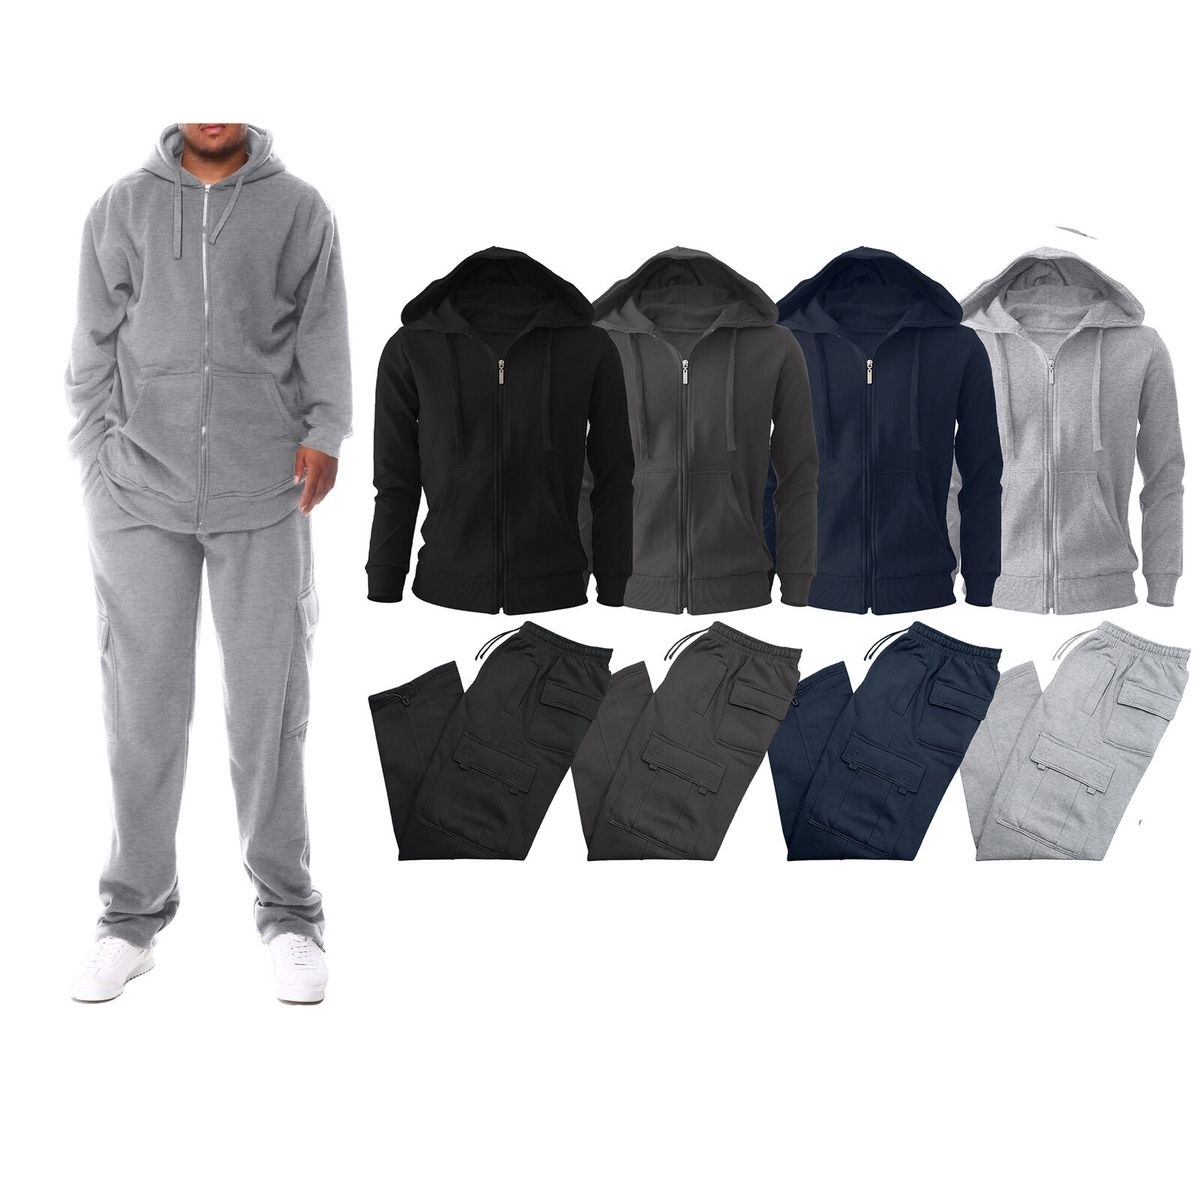 Multi-Pack: Men's Big & Tall Winter Warm Athletic Active Cozy Fleece Lined Multi-Pocket Full Zip Up Cargo Tracksuit - Grey, 2-pack, Medium